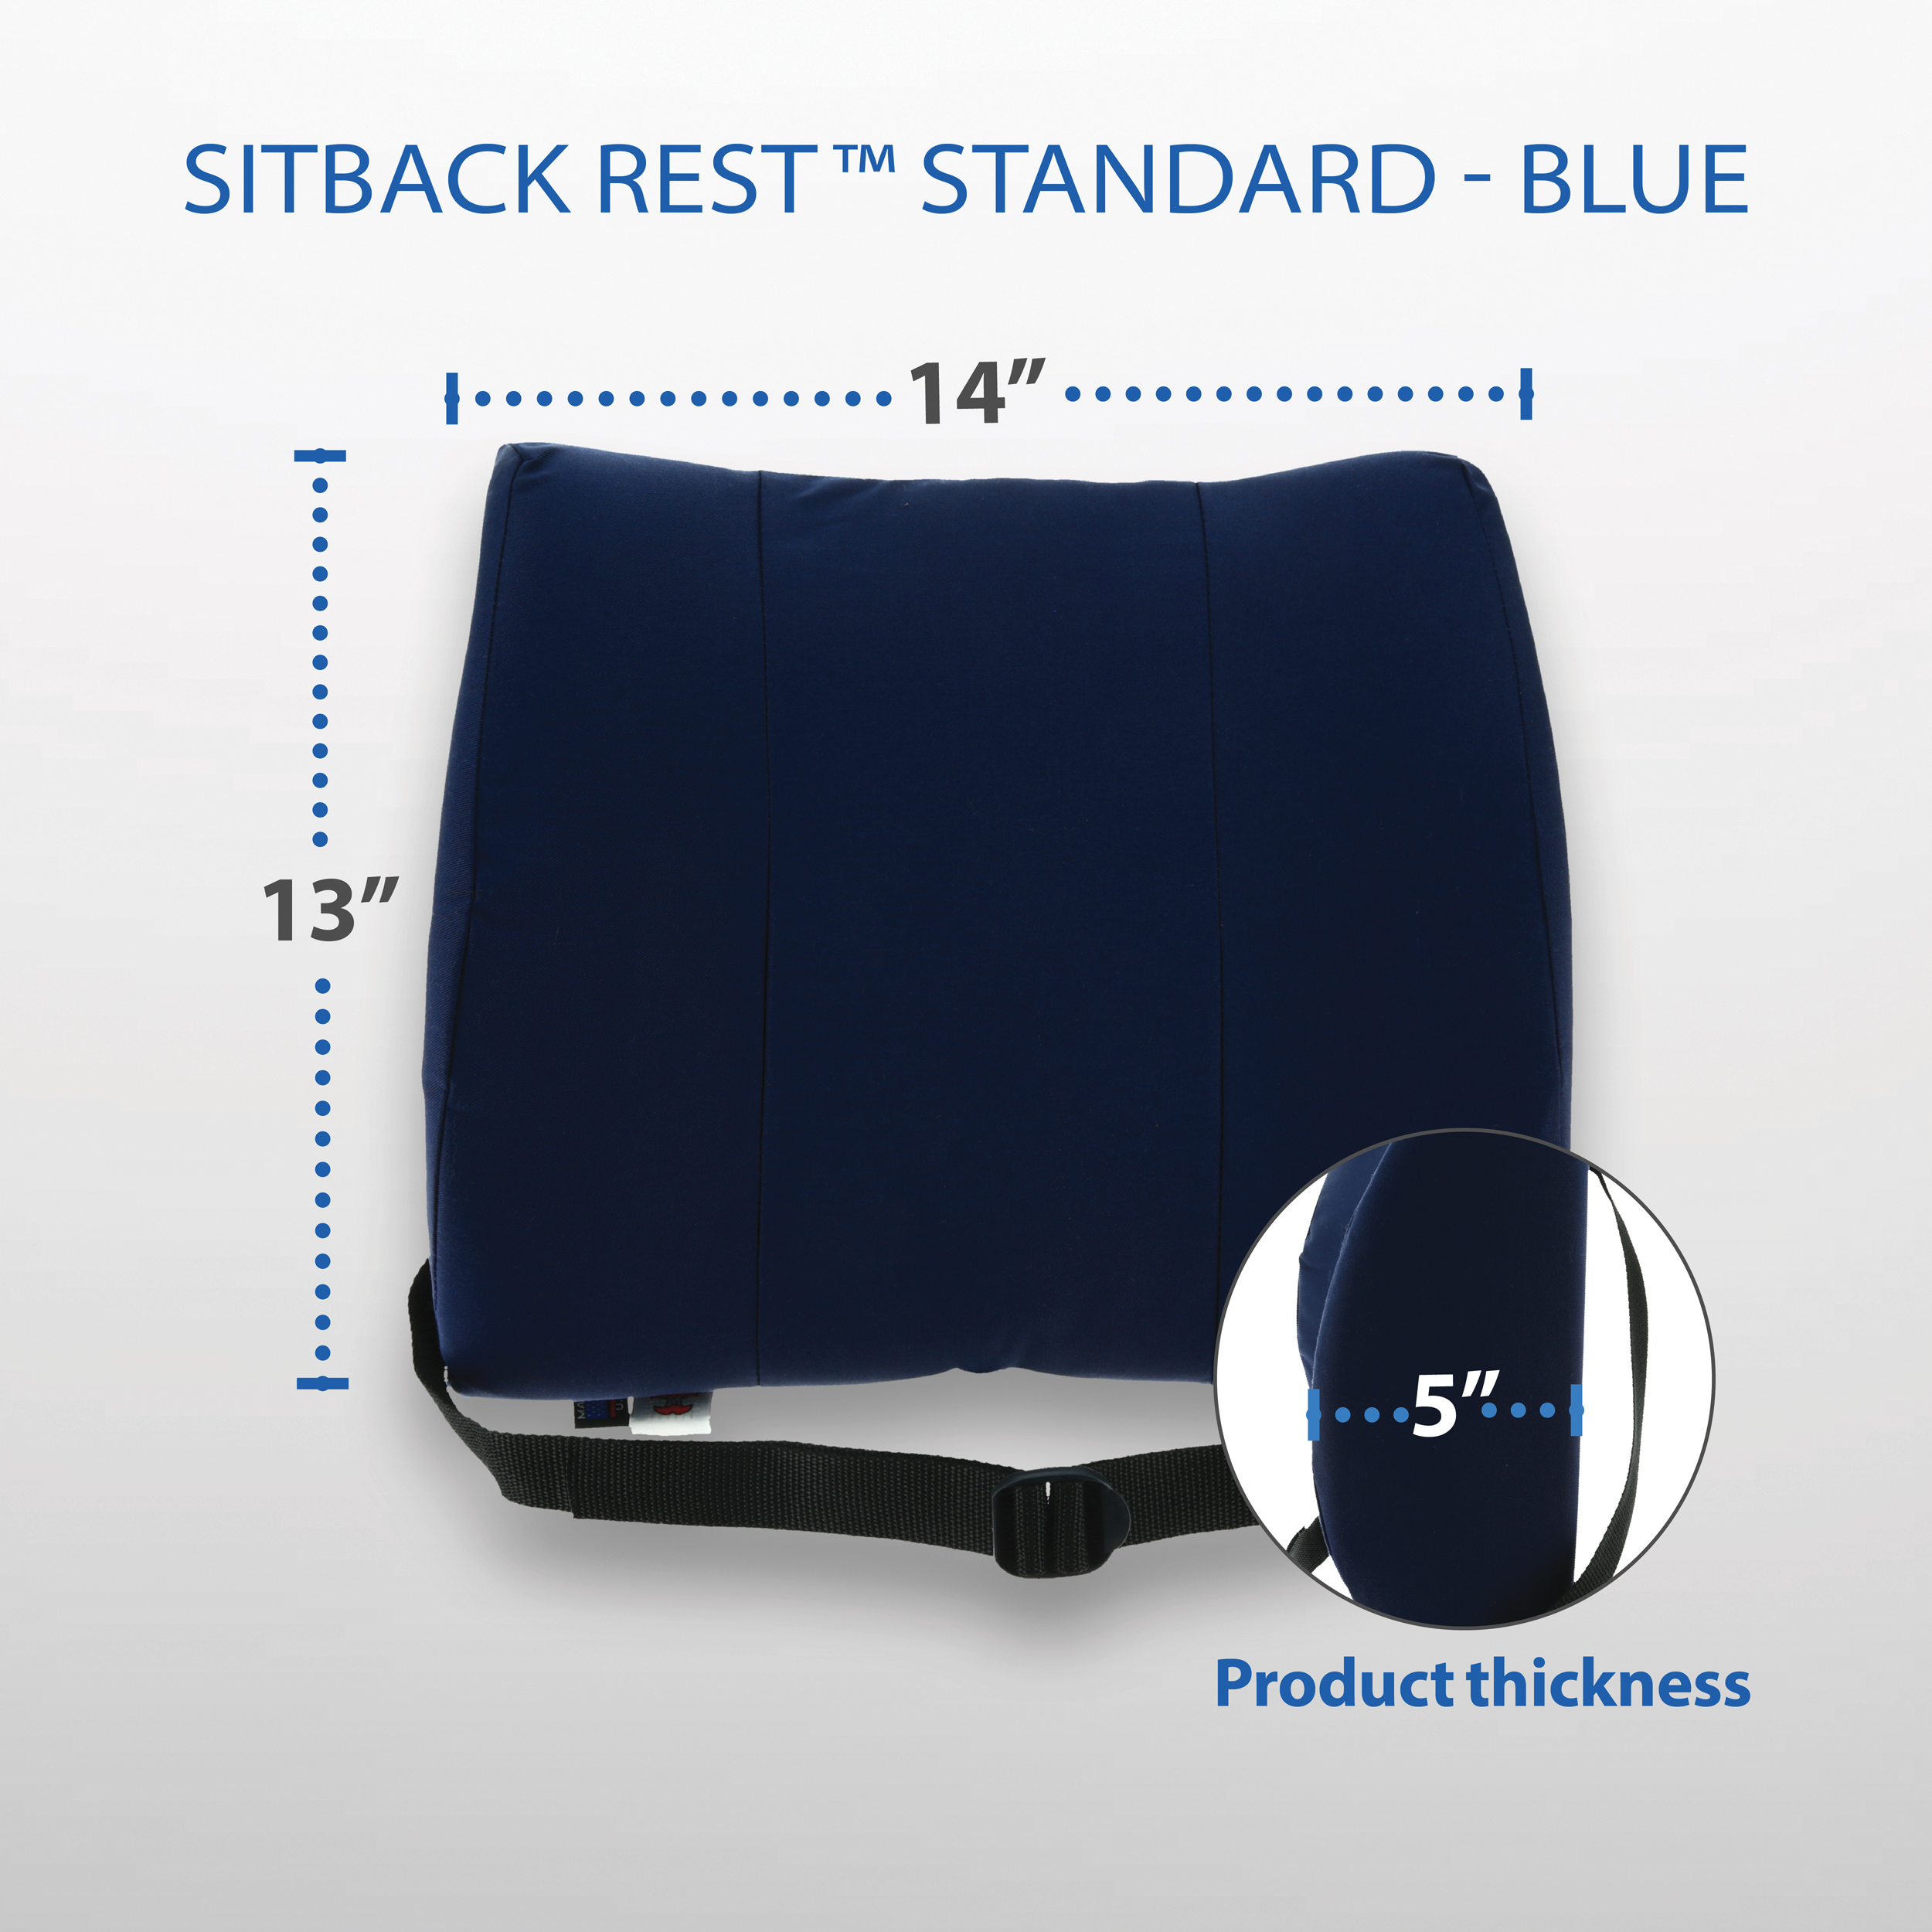 Sitback Mesh Backrest, Lumbar Support